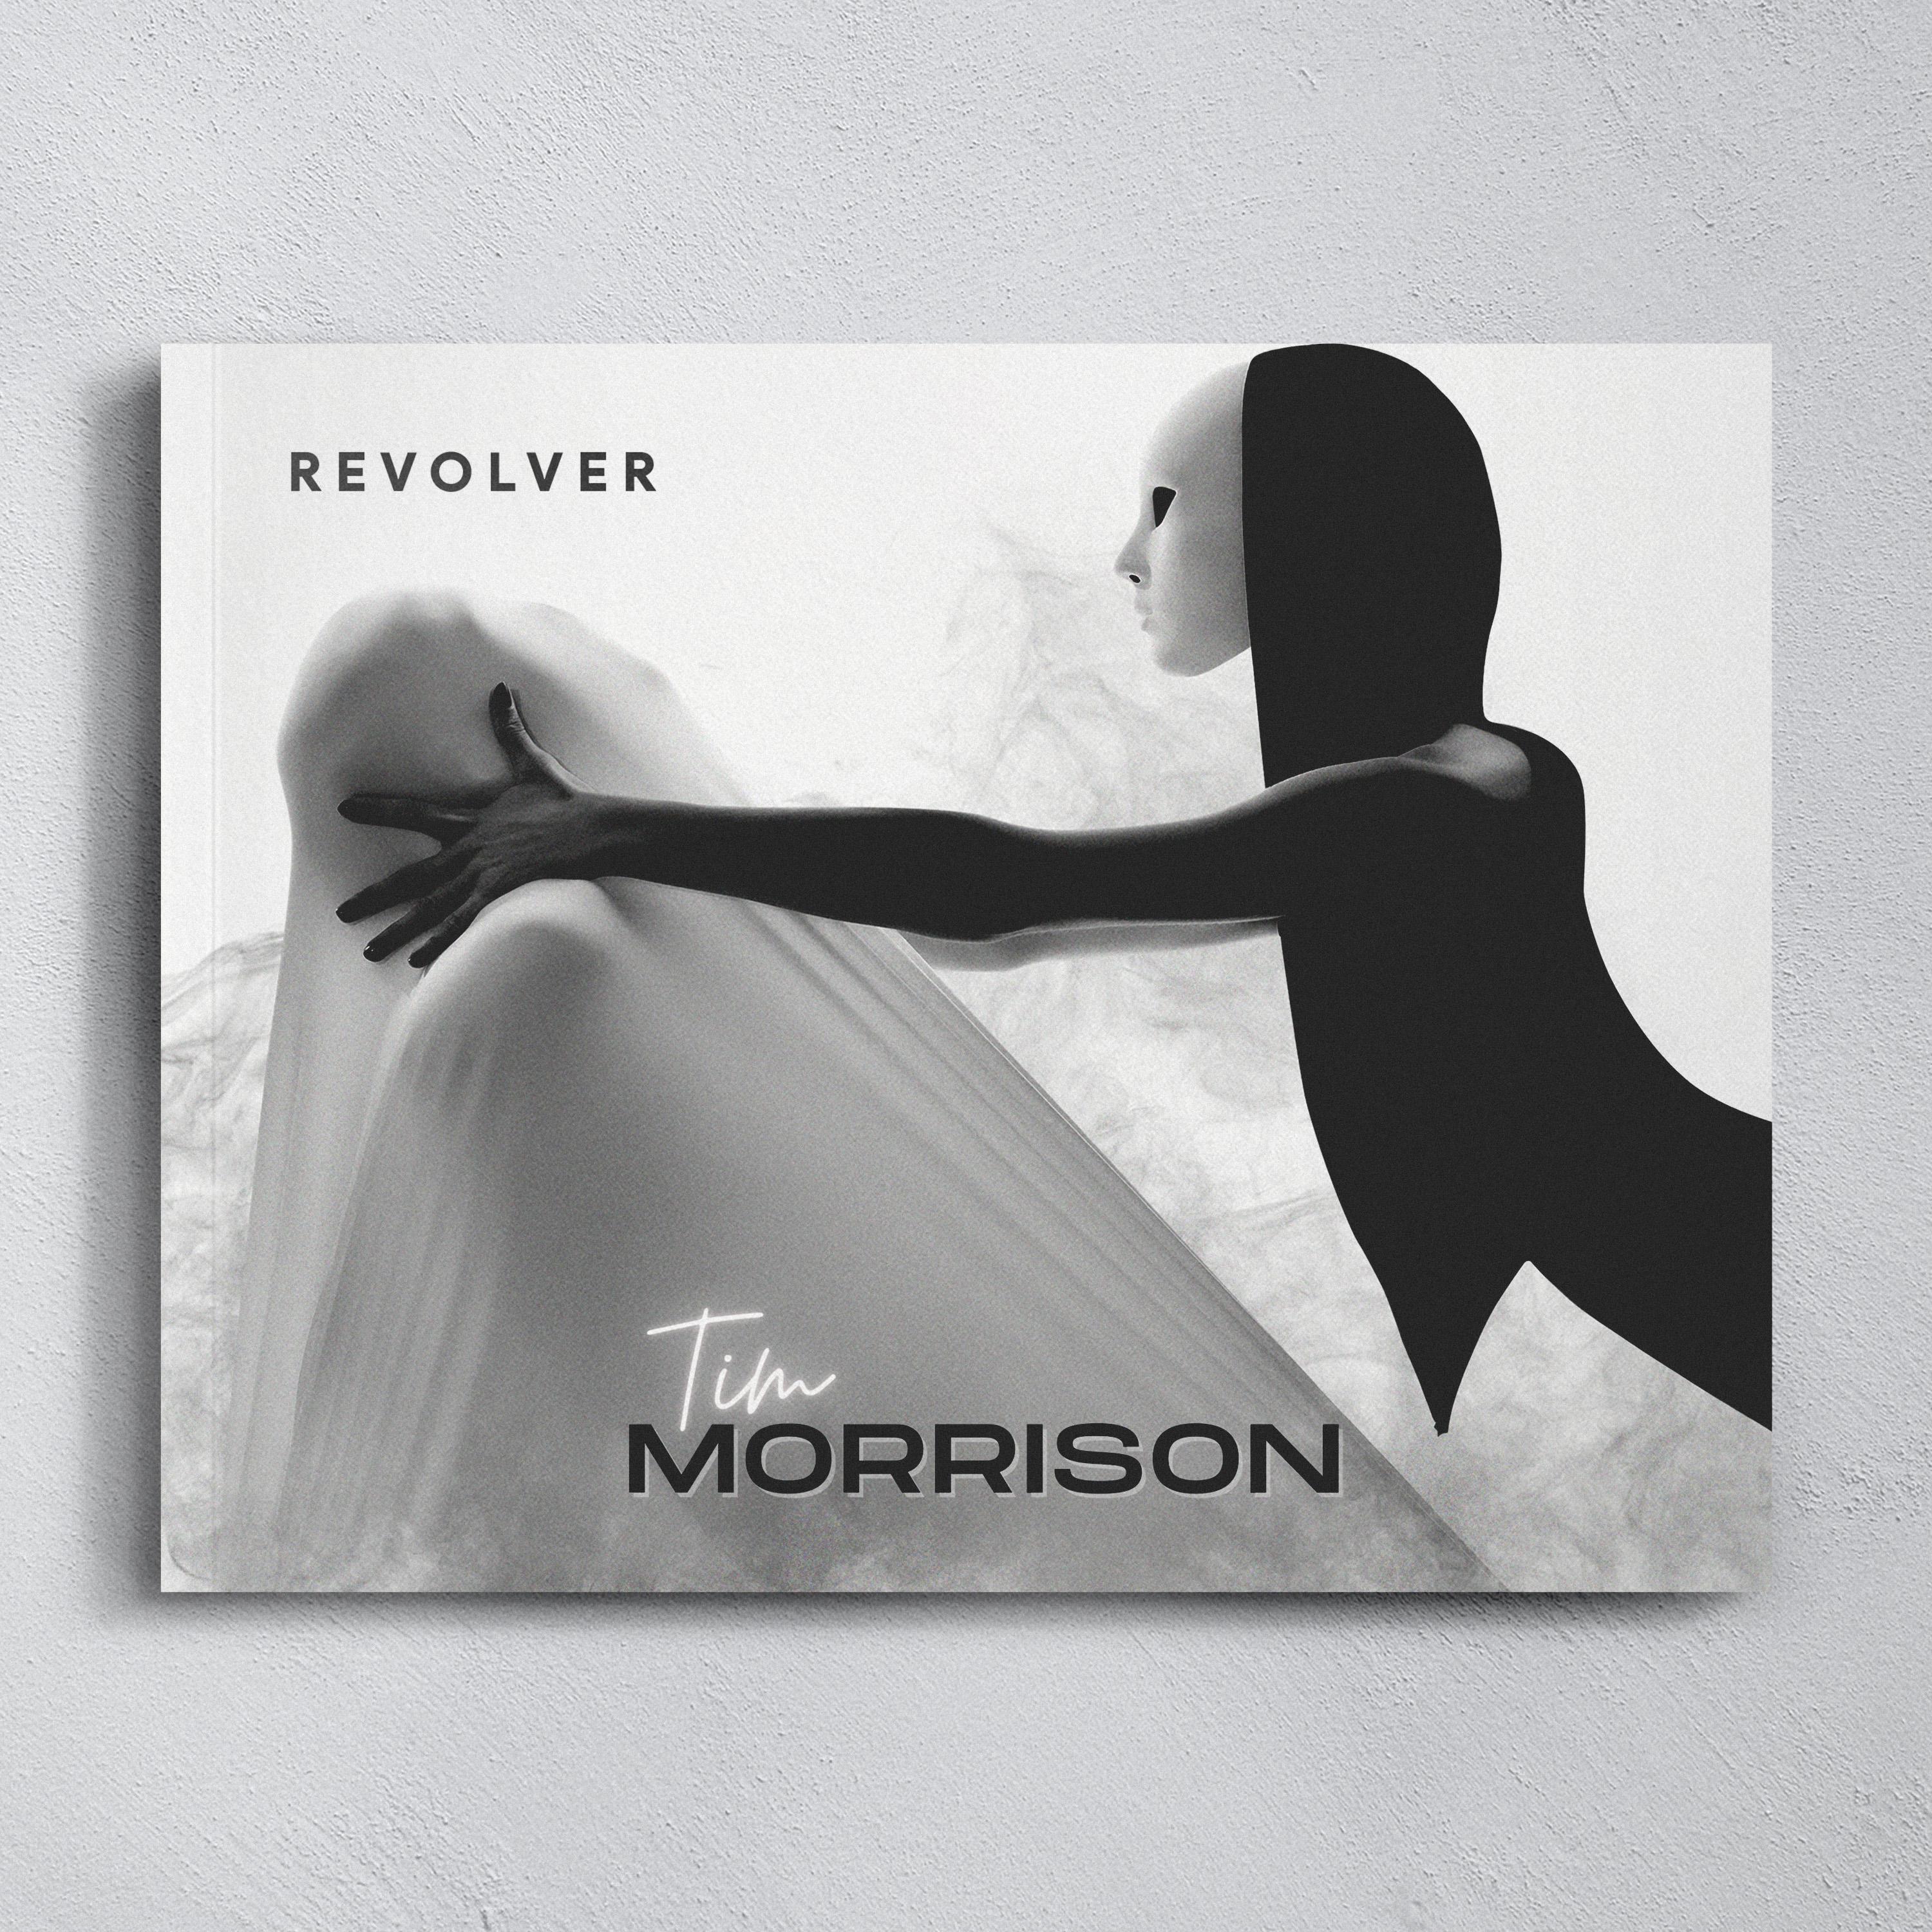 Tim Morrison - Revolver